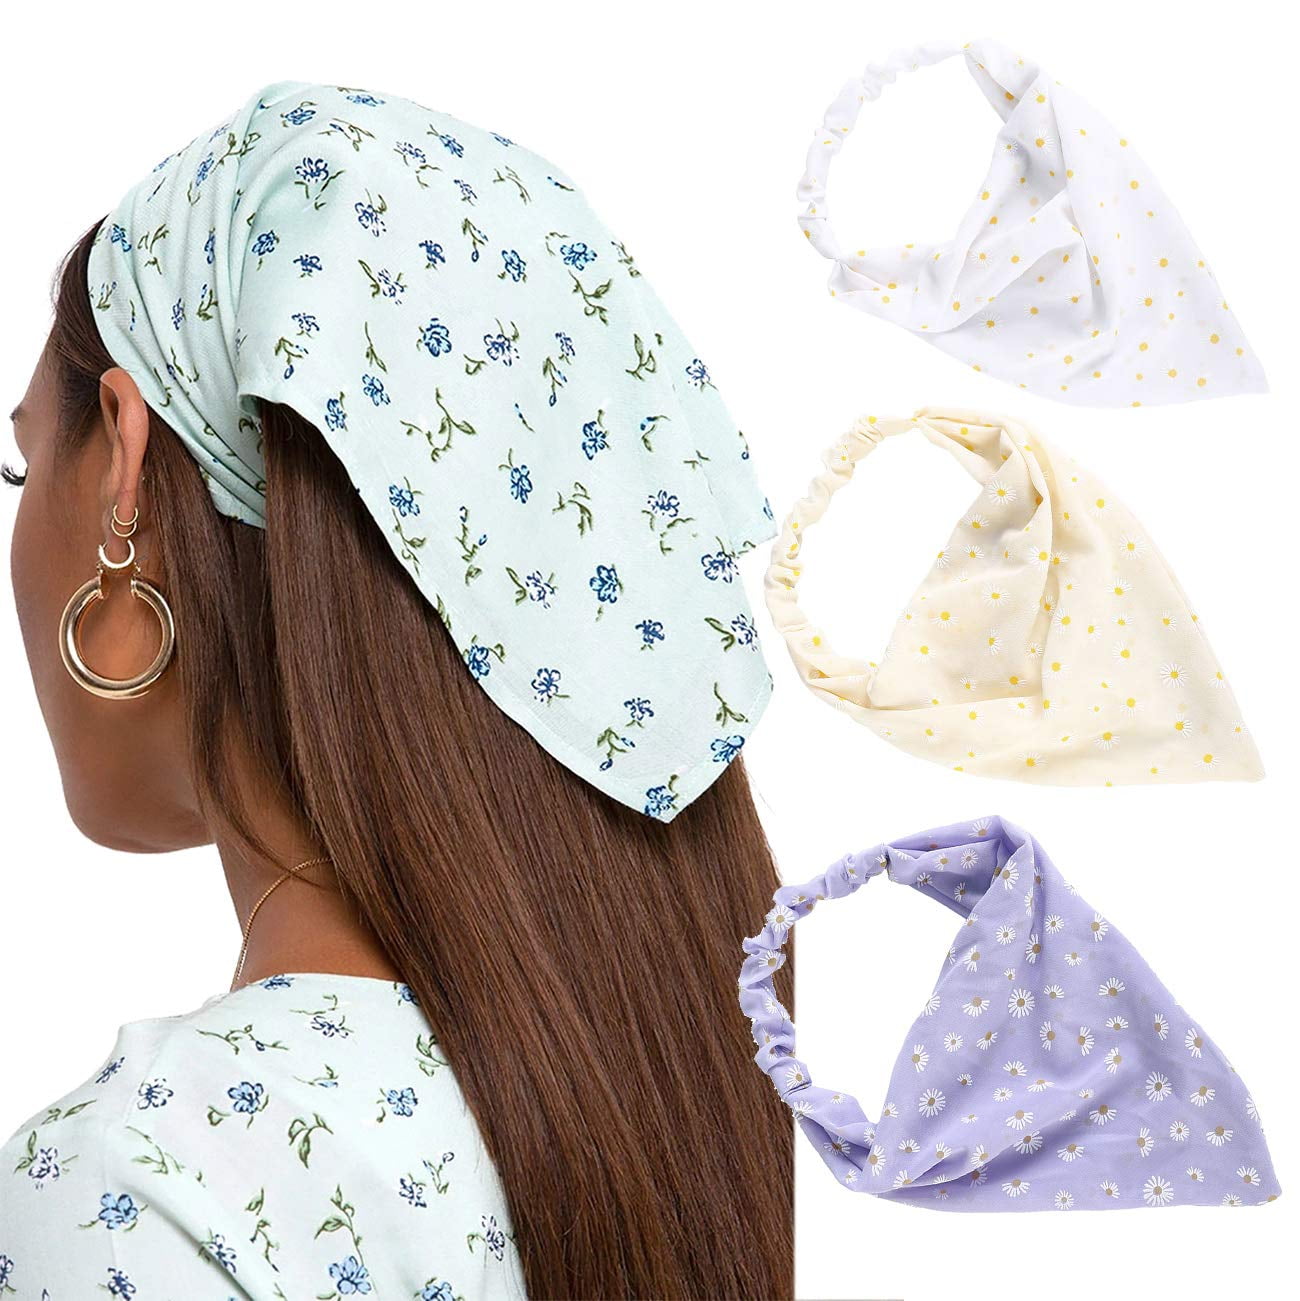 African Print Women Head Bandana Cotton With Matching Earring Balaclava  Headscarf Mujer Headband Set Hair Accessories 231221 From Bong05, $16.2